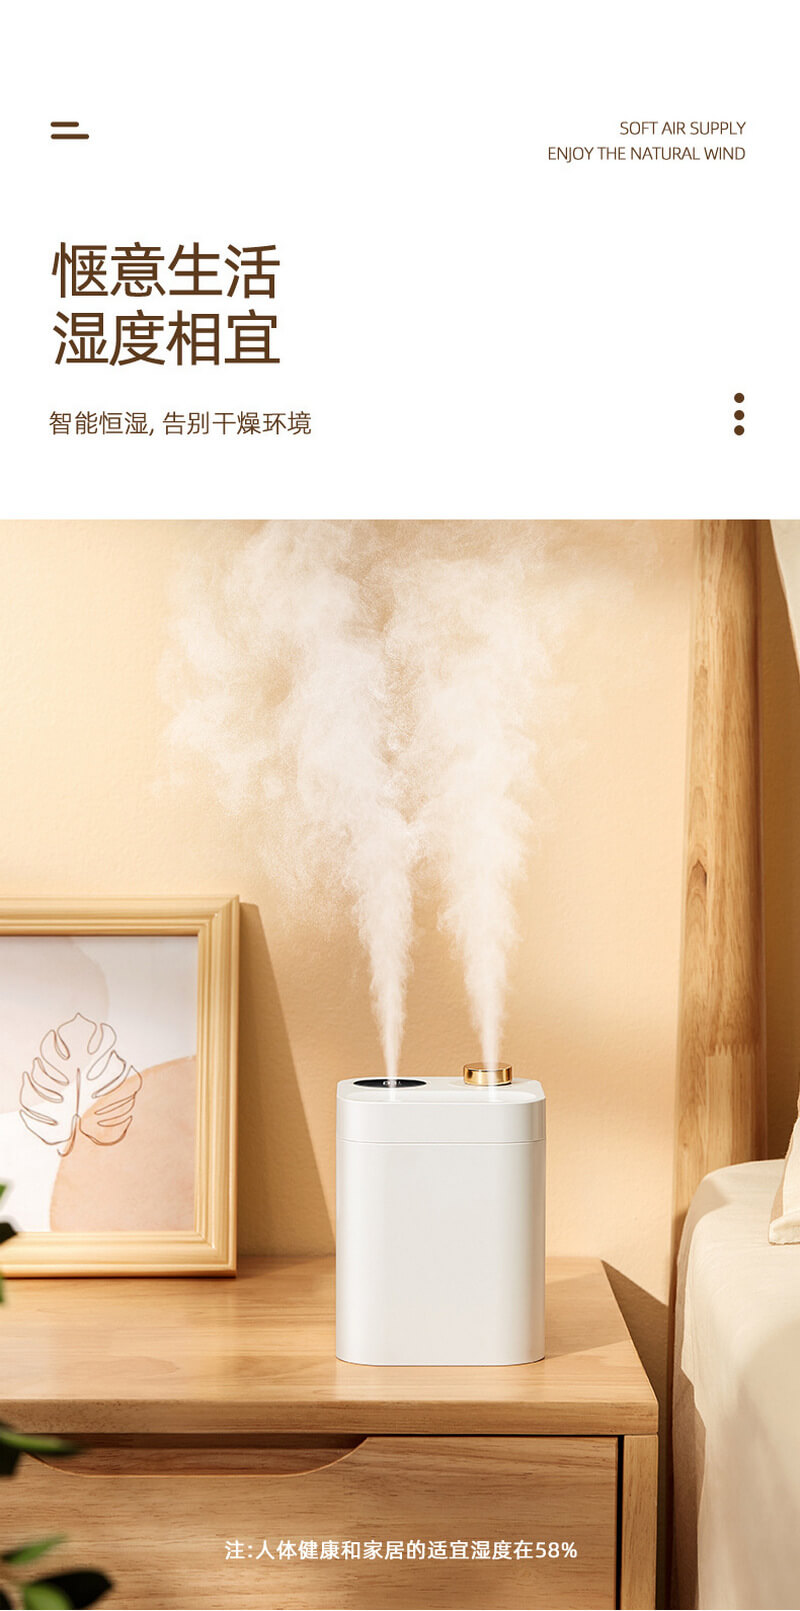 fangyuan usb humidifier heavy fog air purification silent indoor double spray11